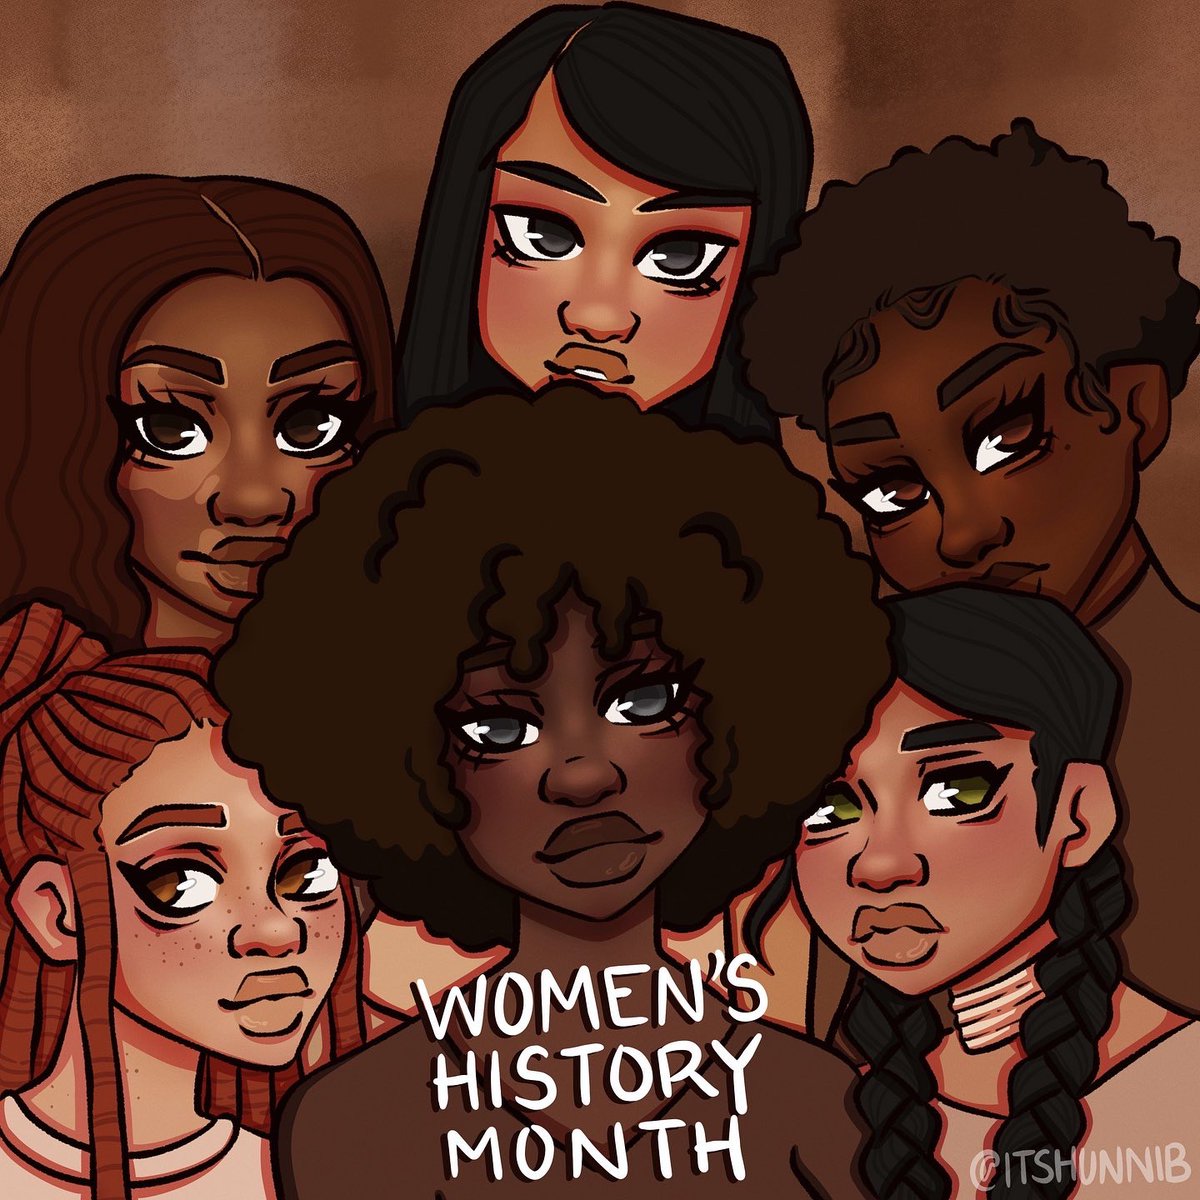 Happy Women’s History Month. Had to draw some cuties ✨
.
.
.
.
#WomensHistoryMonth  #herstory #blackcreators #blackillustrators #RepresentationMatters